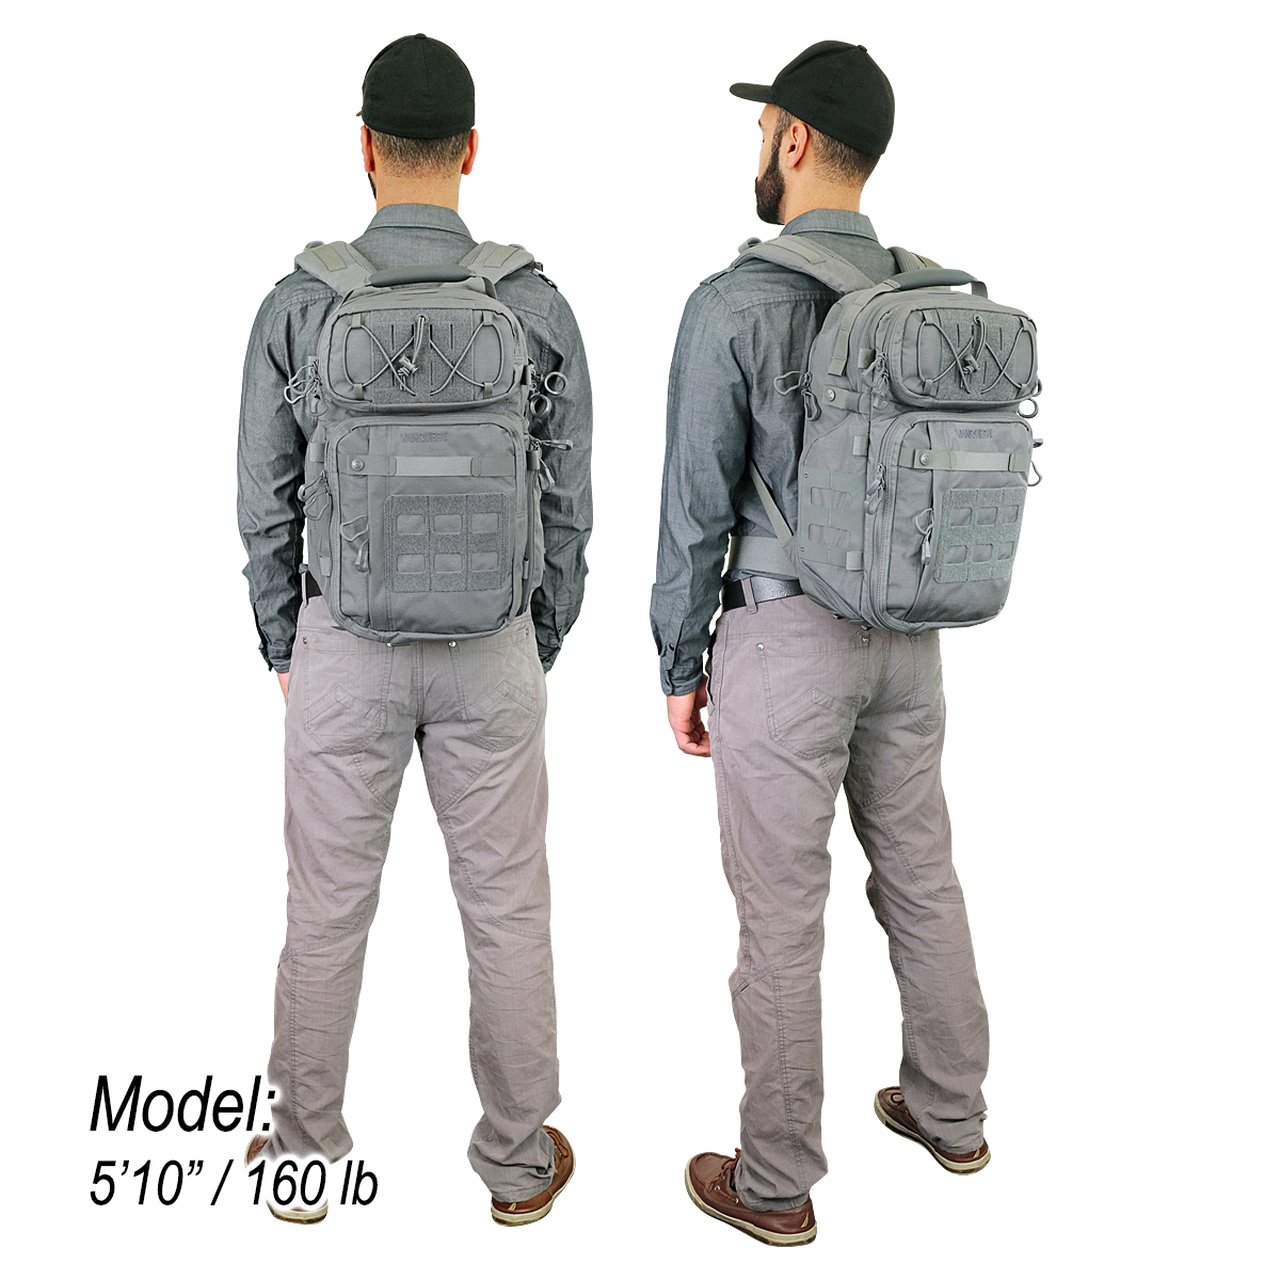 Balo VANQUEST TRIDENT-21 (Gen-3) Backpack – Black